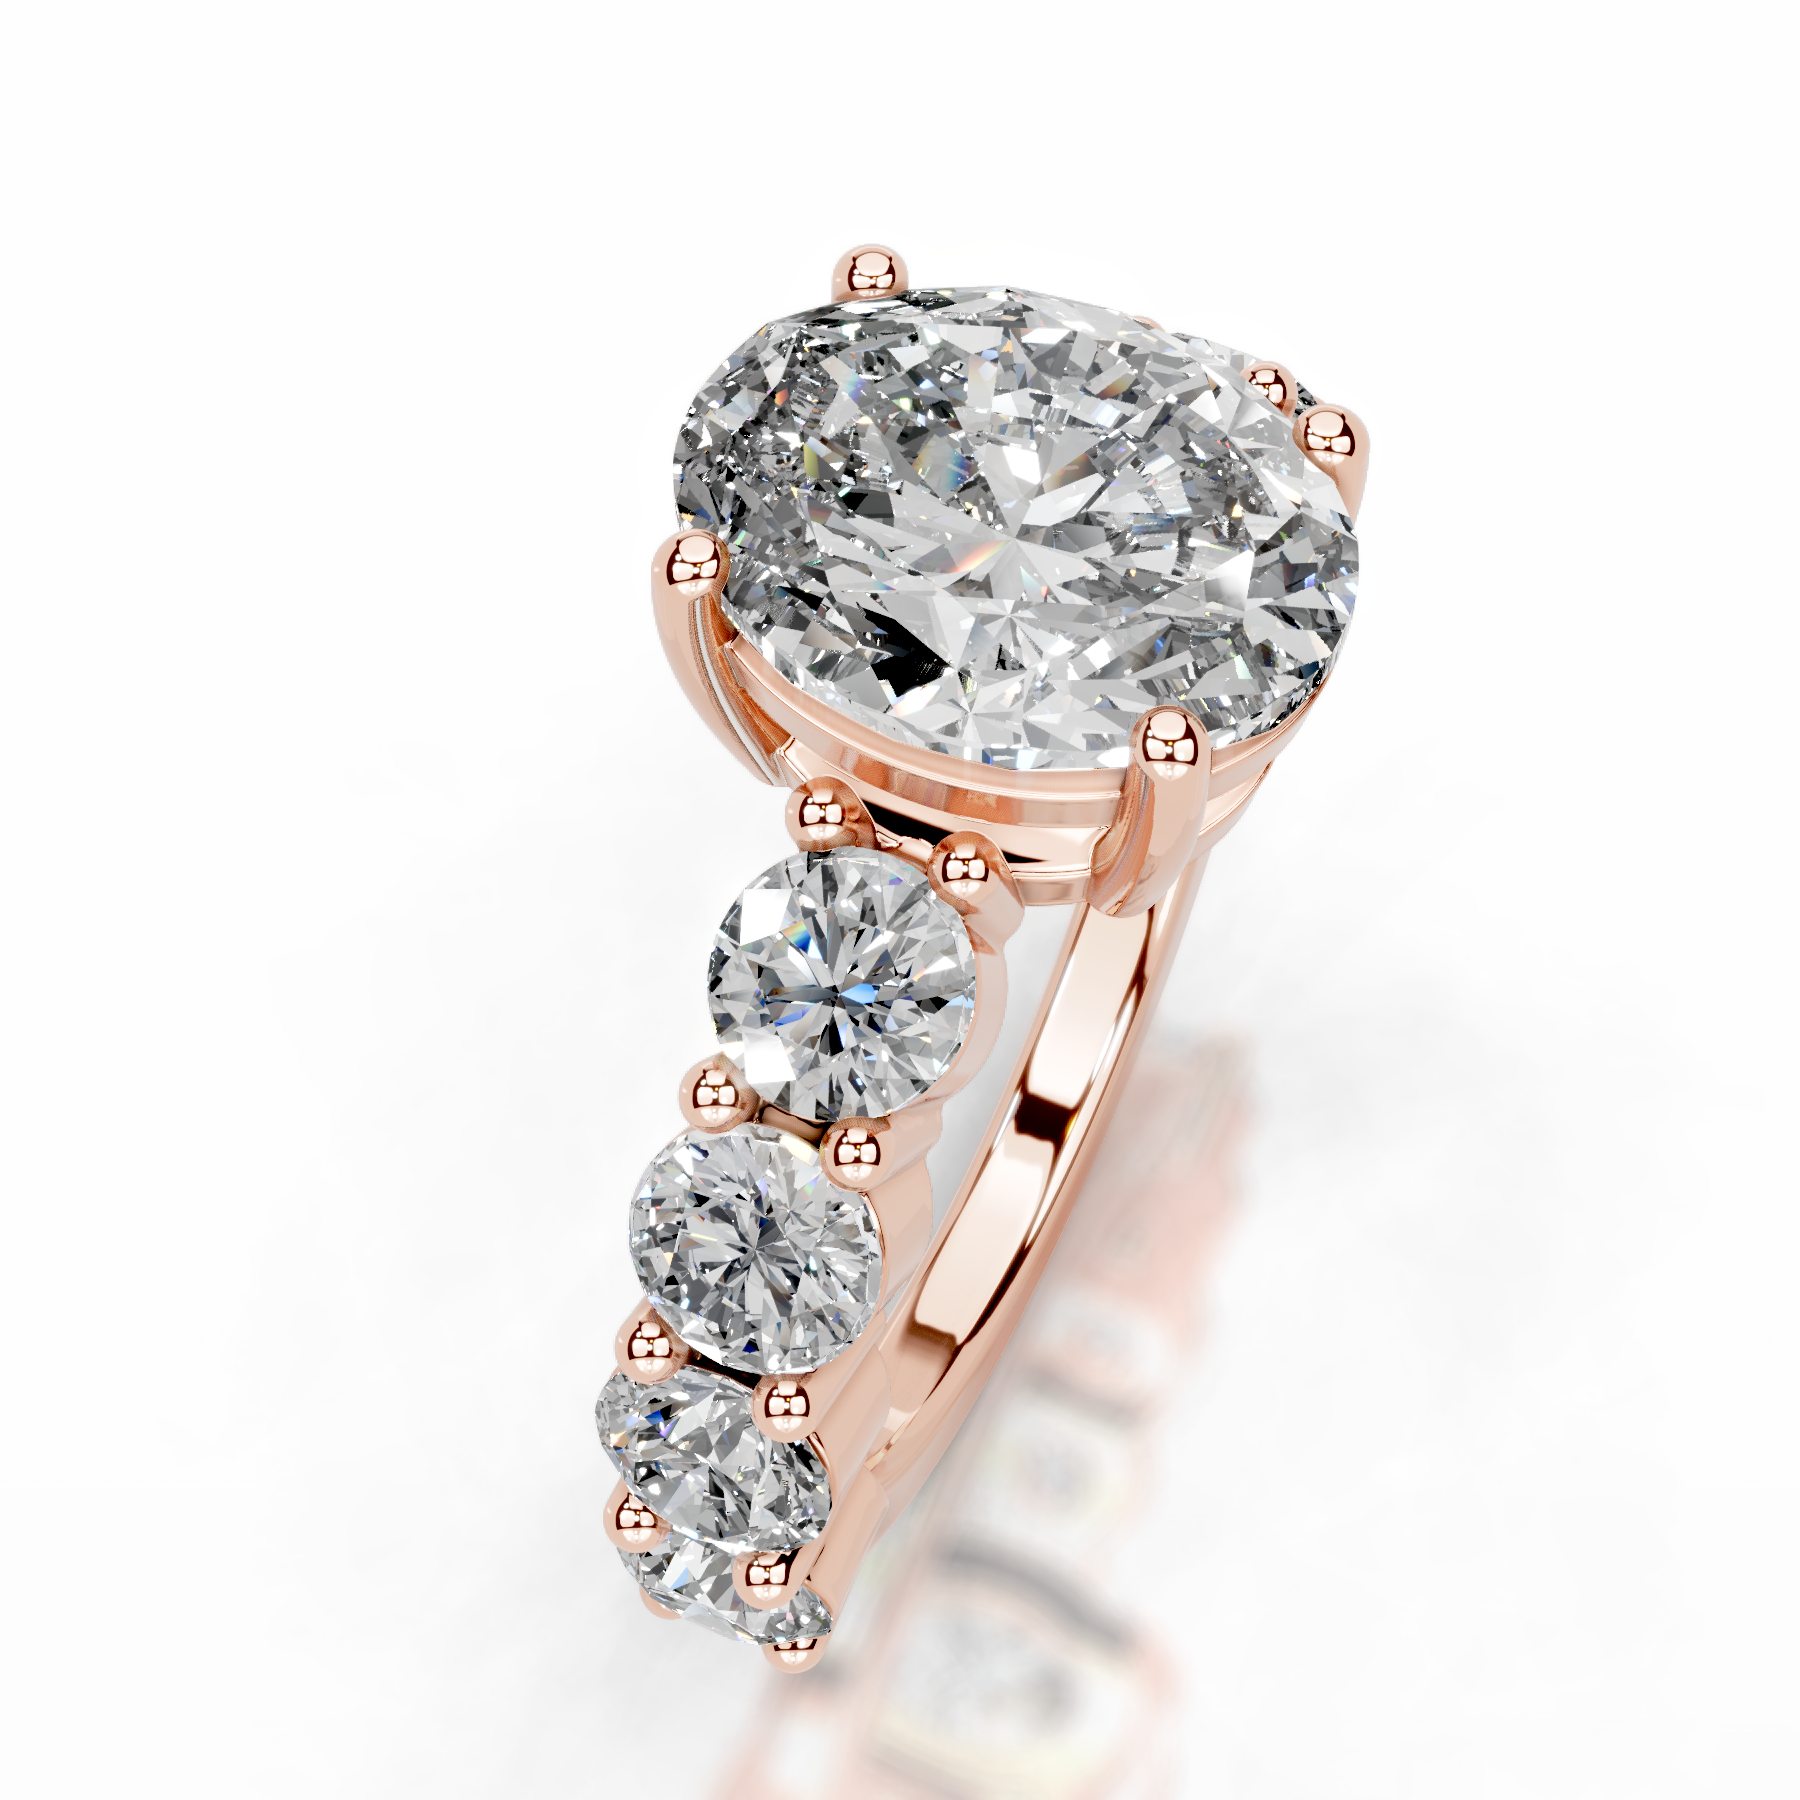 Odin Diamond Engagement Ring   (4 Carat) -14K Rose Gold